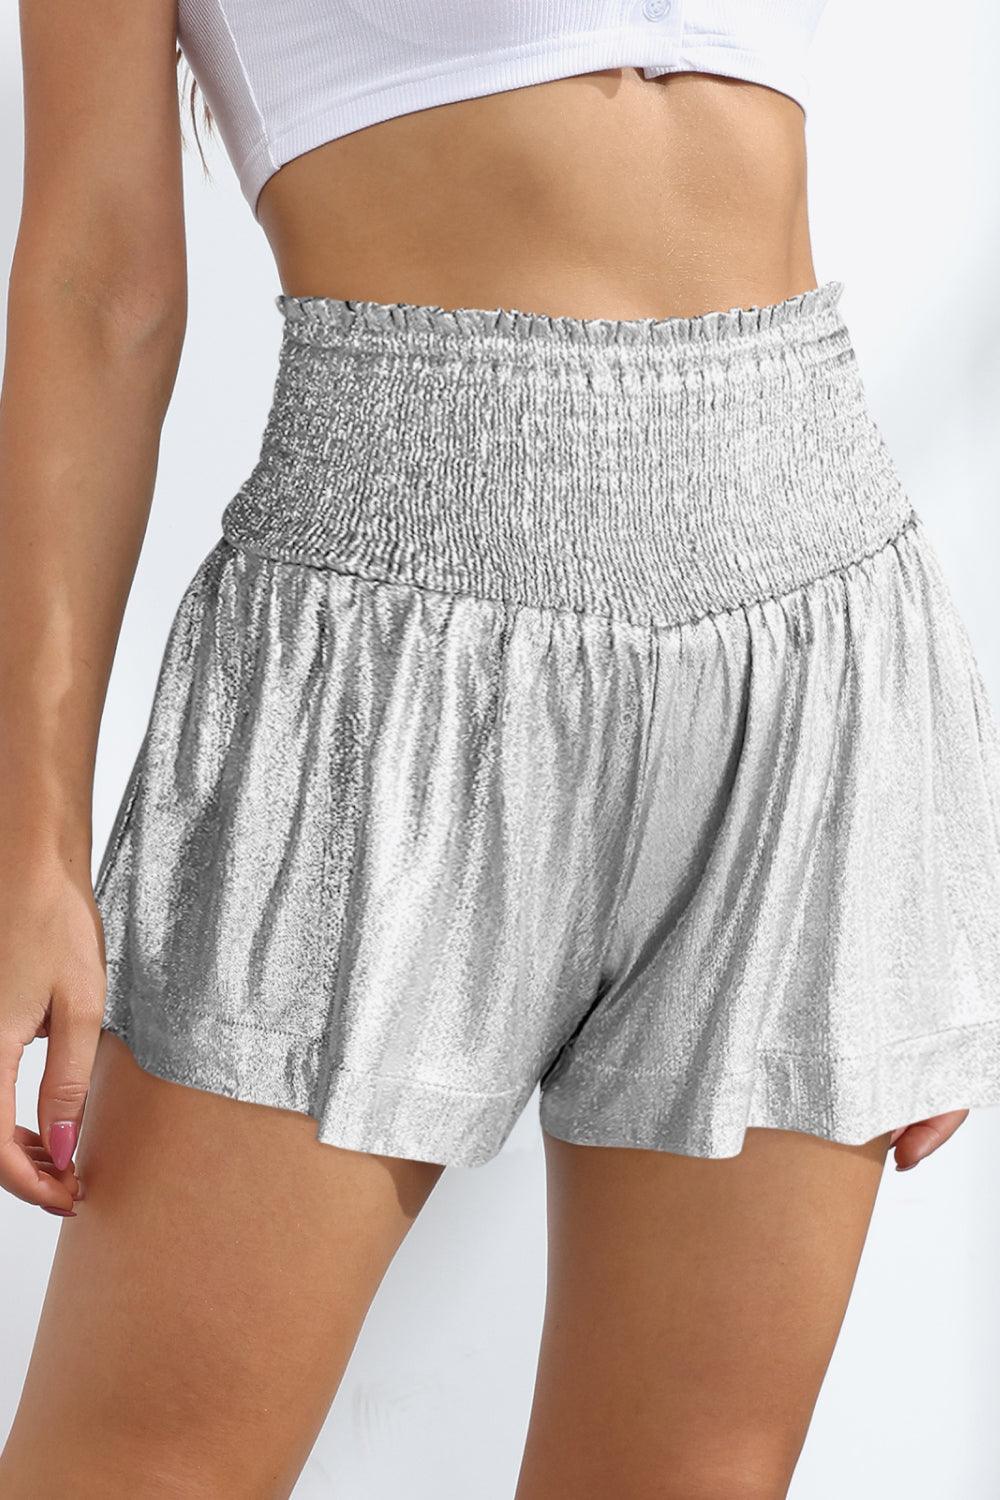 Actively Fit Glitter High Waist Smocked Shorts - MXSTUDIO.COM